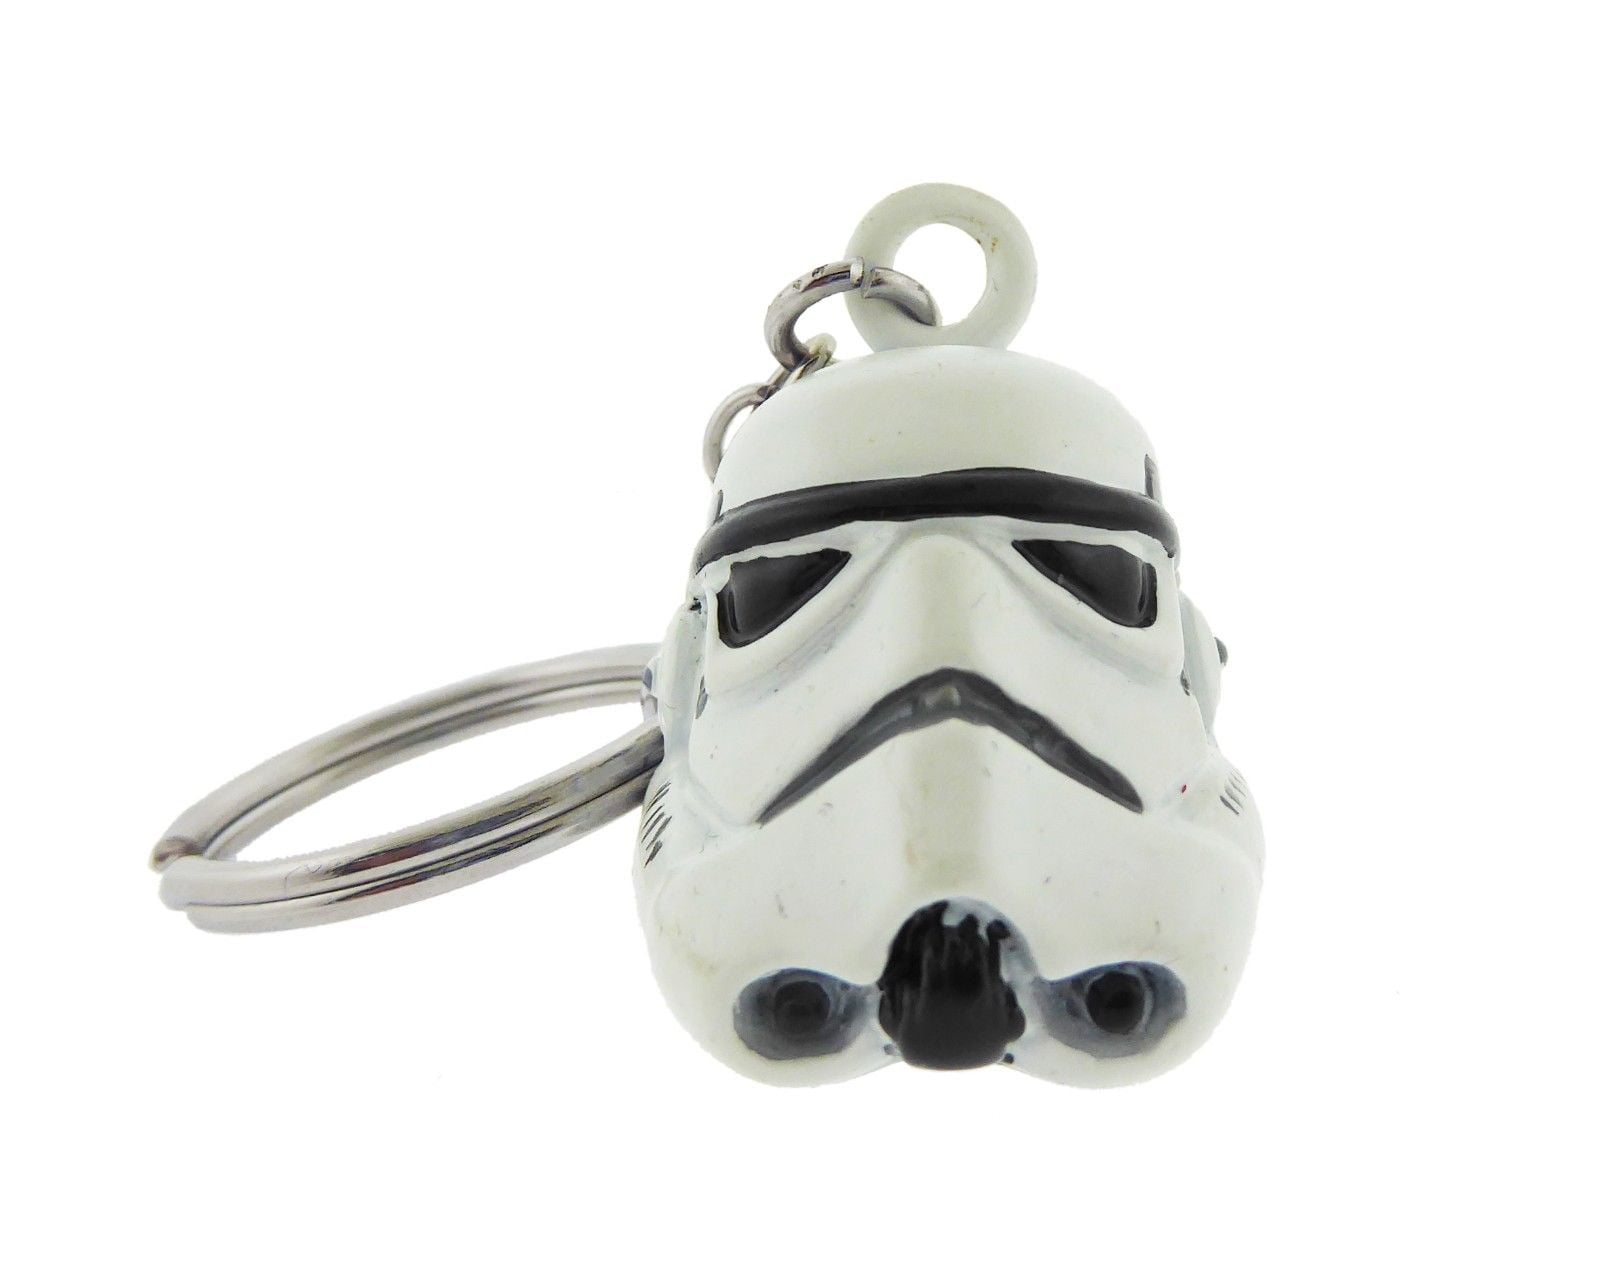 U.S. 2 STAR WARS Storm Trooper Figurine metal replica keychain White And Silver 